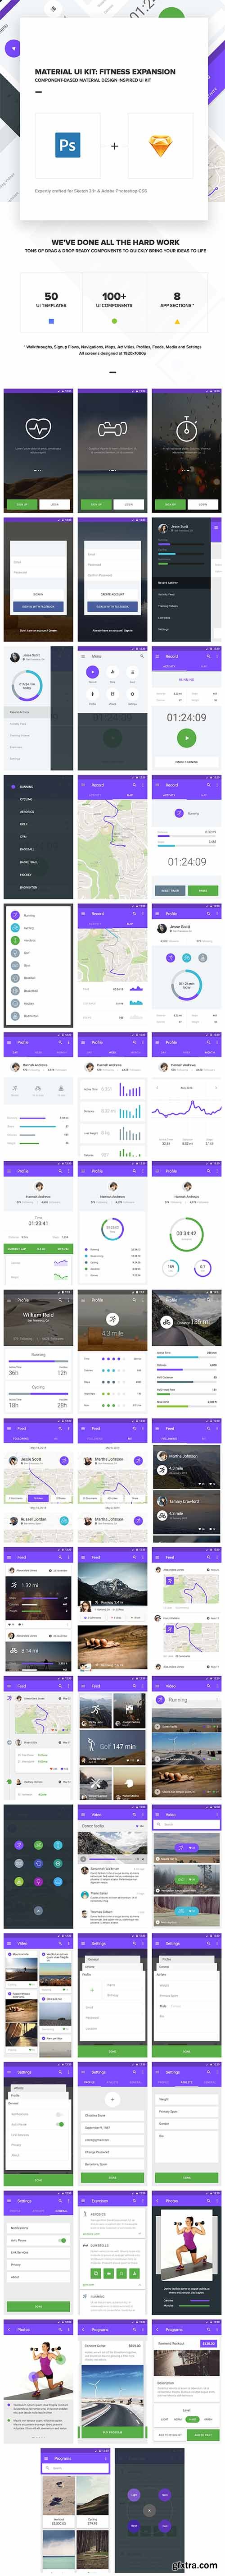 Material UI Kit: Fitness - Material Design for fitness apps